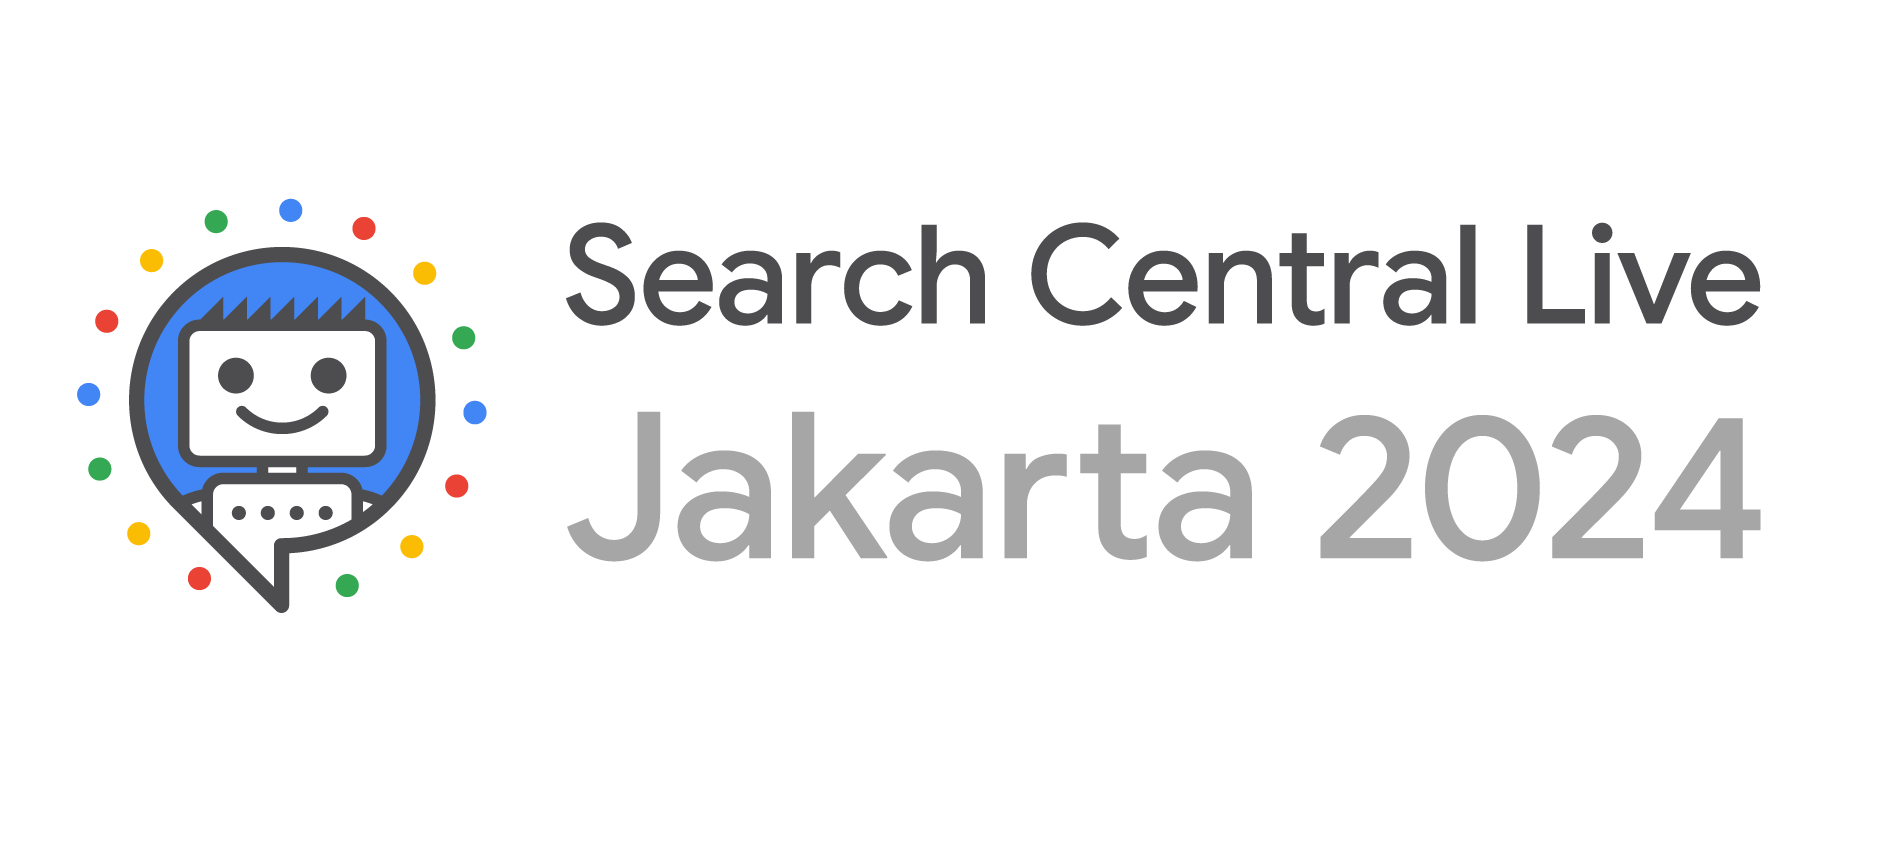 Search Central Live Jakarta 2024